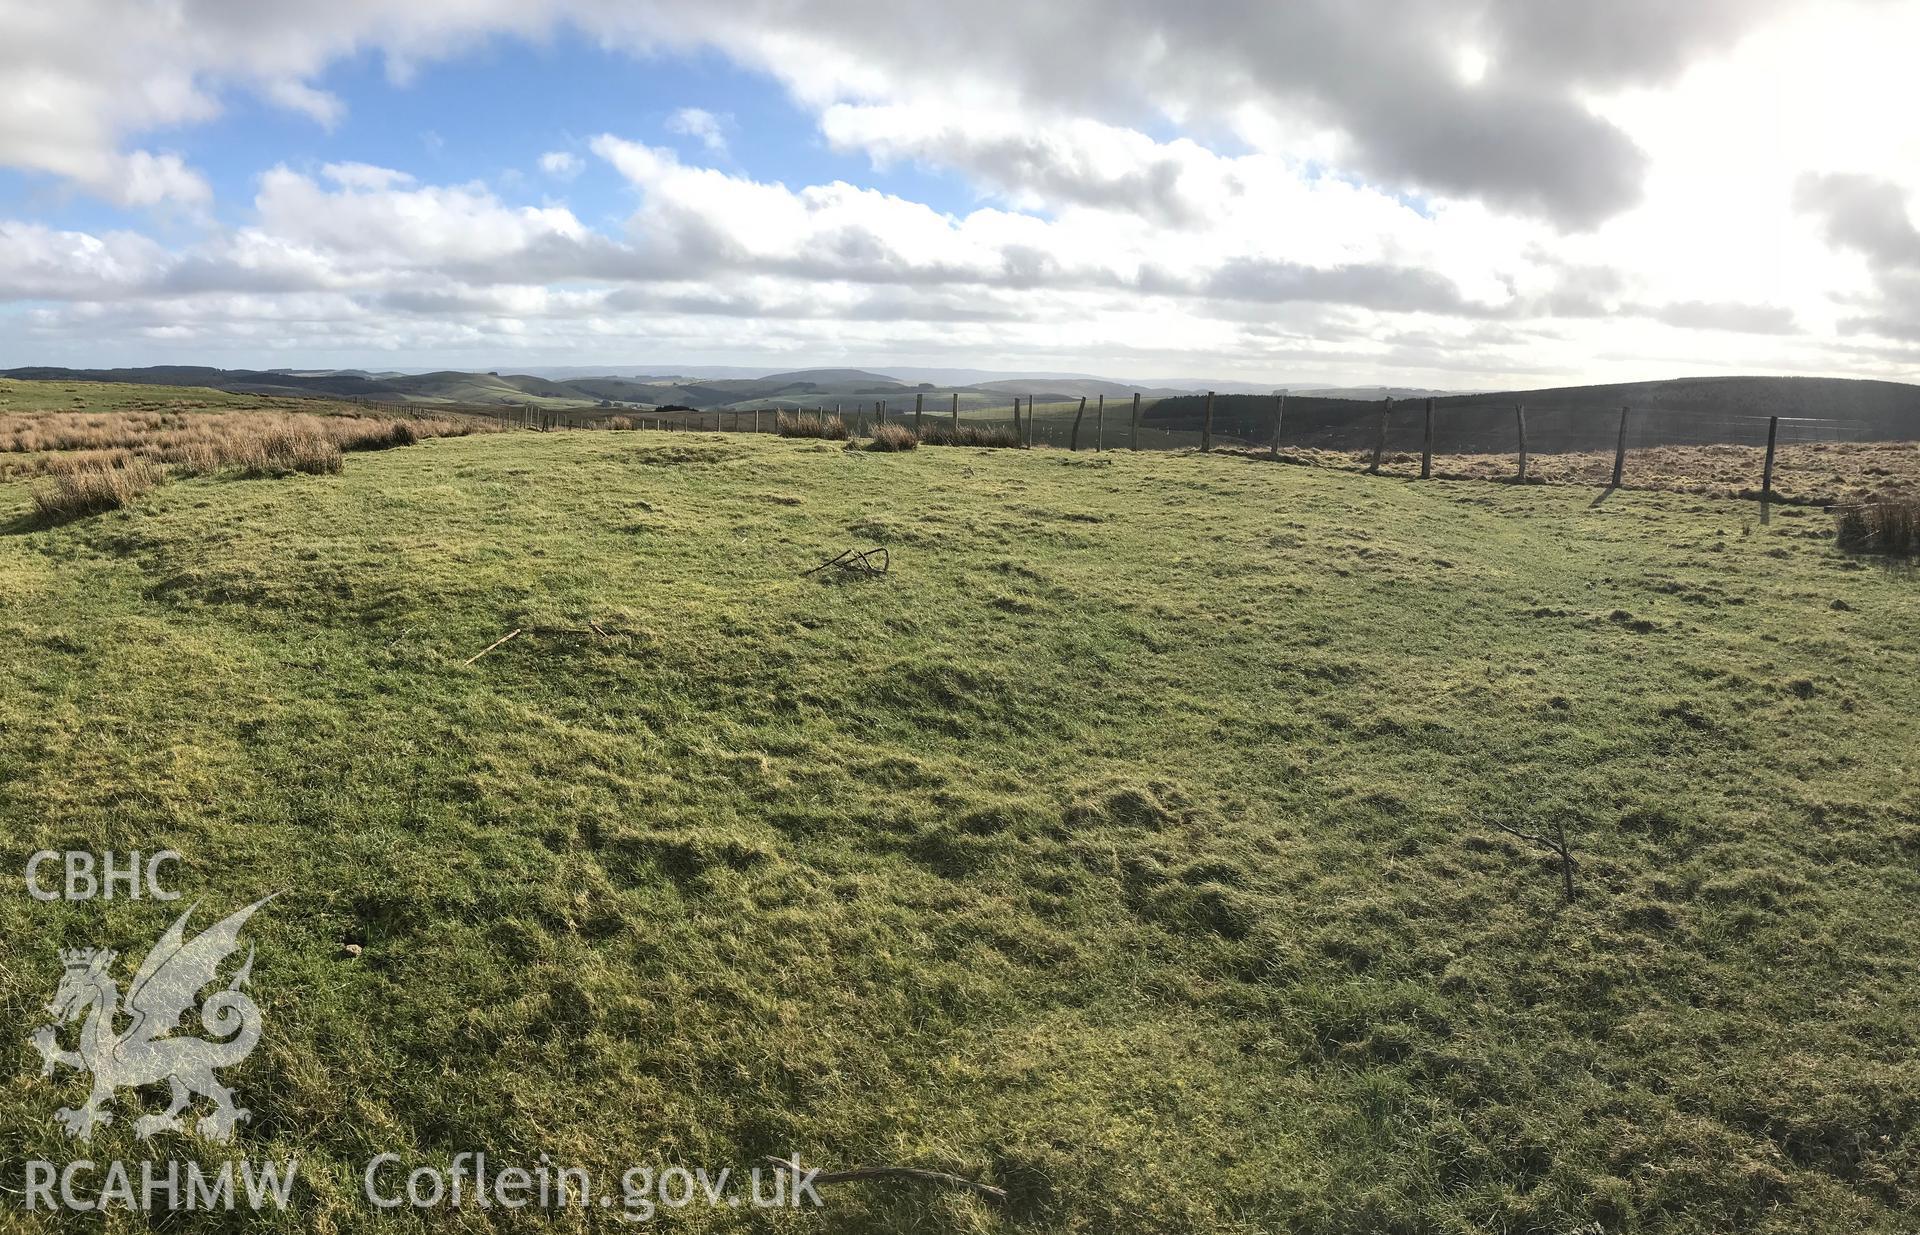 Digital colour photograph of Pen y Crocbren gibbet mound, Llanbrynmair, taken by Paul R. Davis on 16th February 2019.